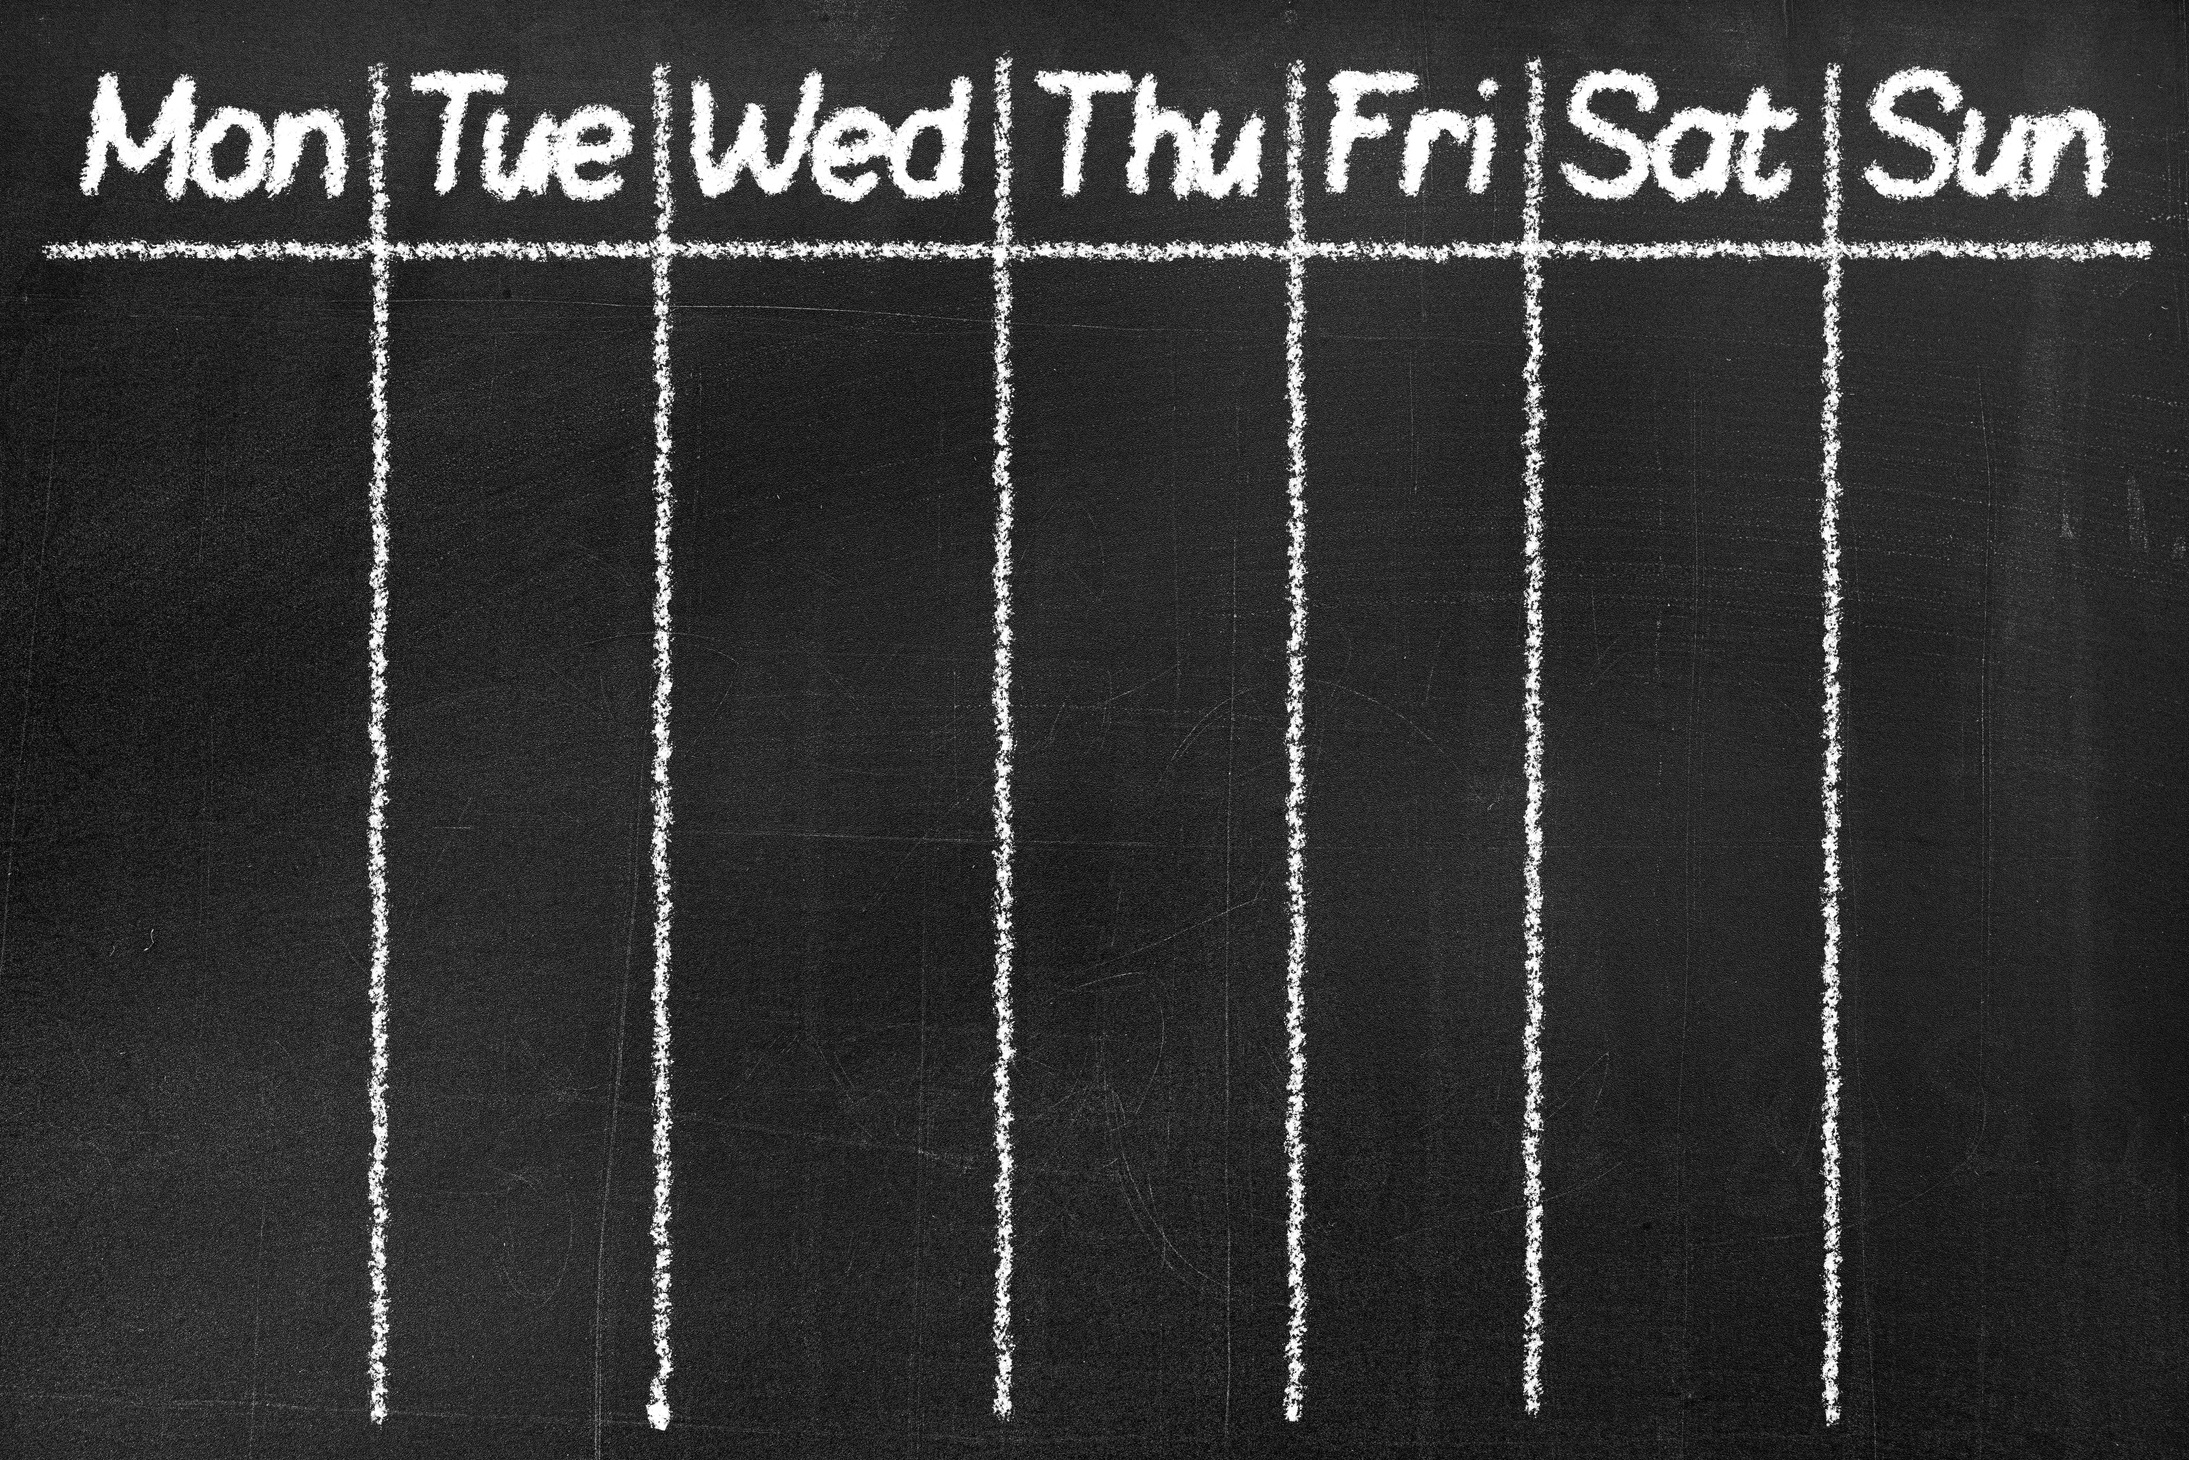 Blackboard with the text 'Monday, Tuesday, Wednesday, Thursday, Friday, Saturday, Sunday '